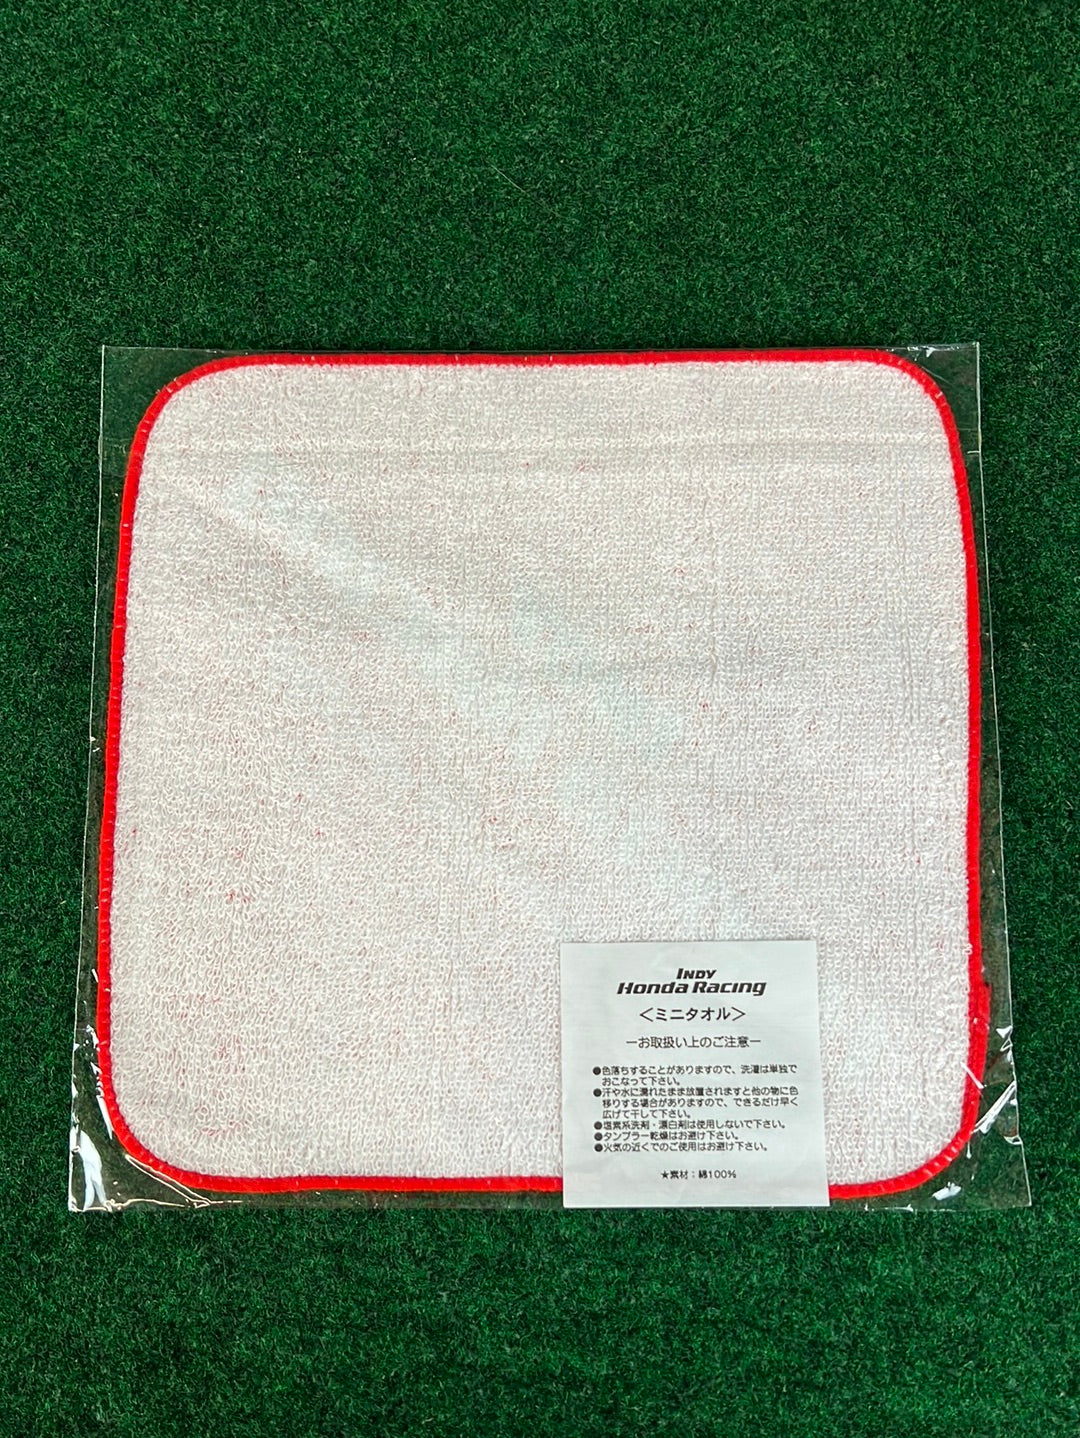 Honda Racing INDY Japan - 2009 Small Towel